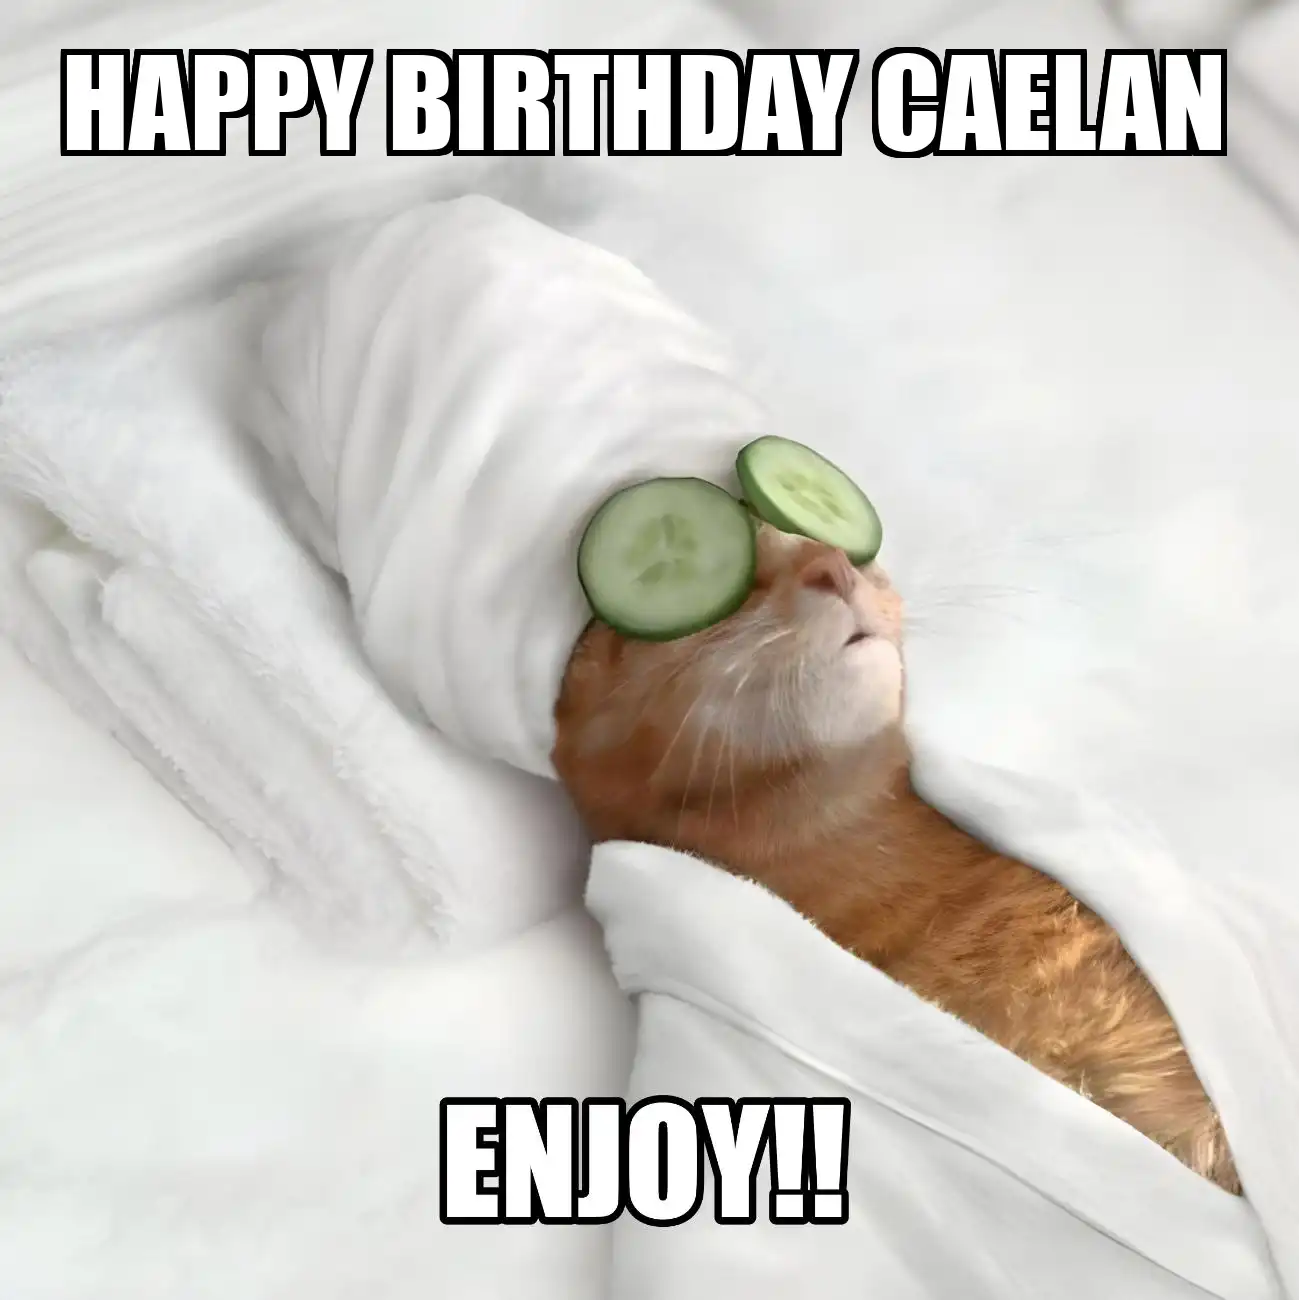 Happy Birthday Caelan Enjoy Cat Meme